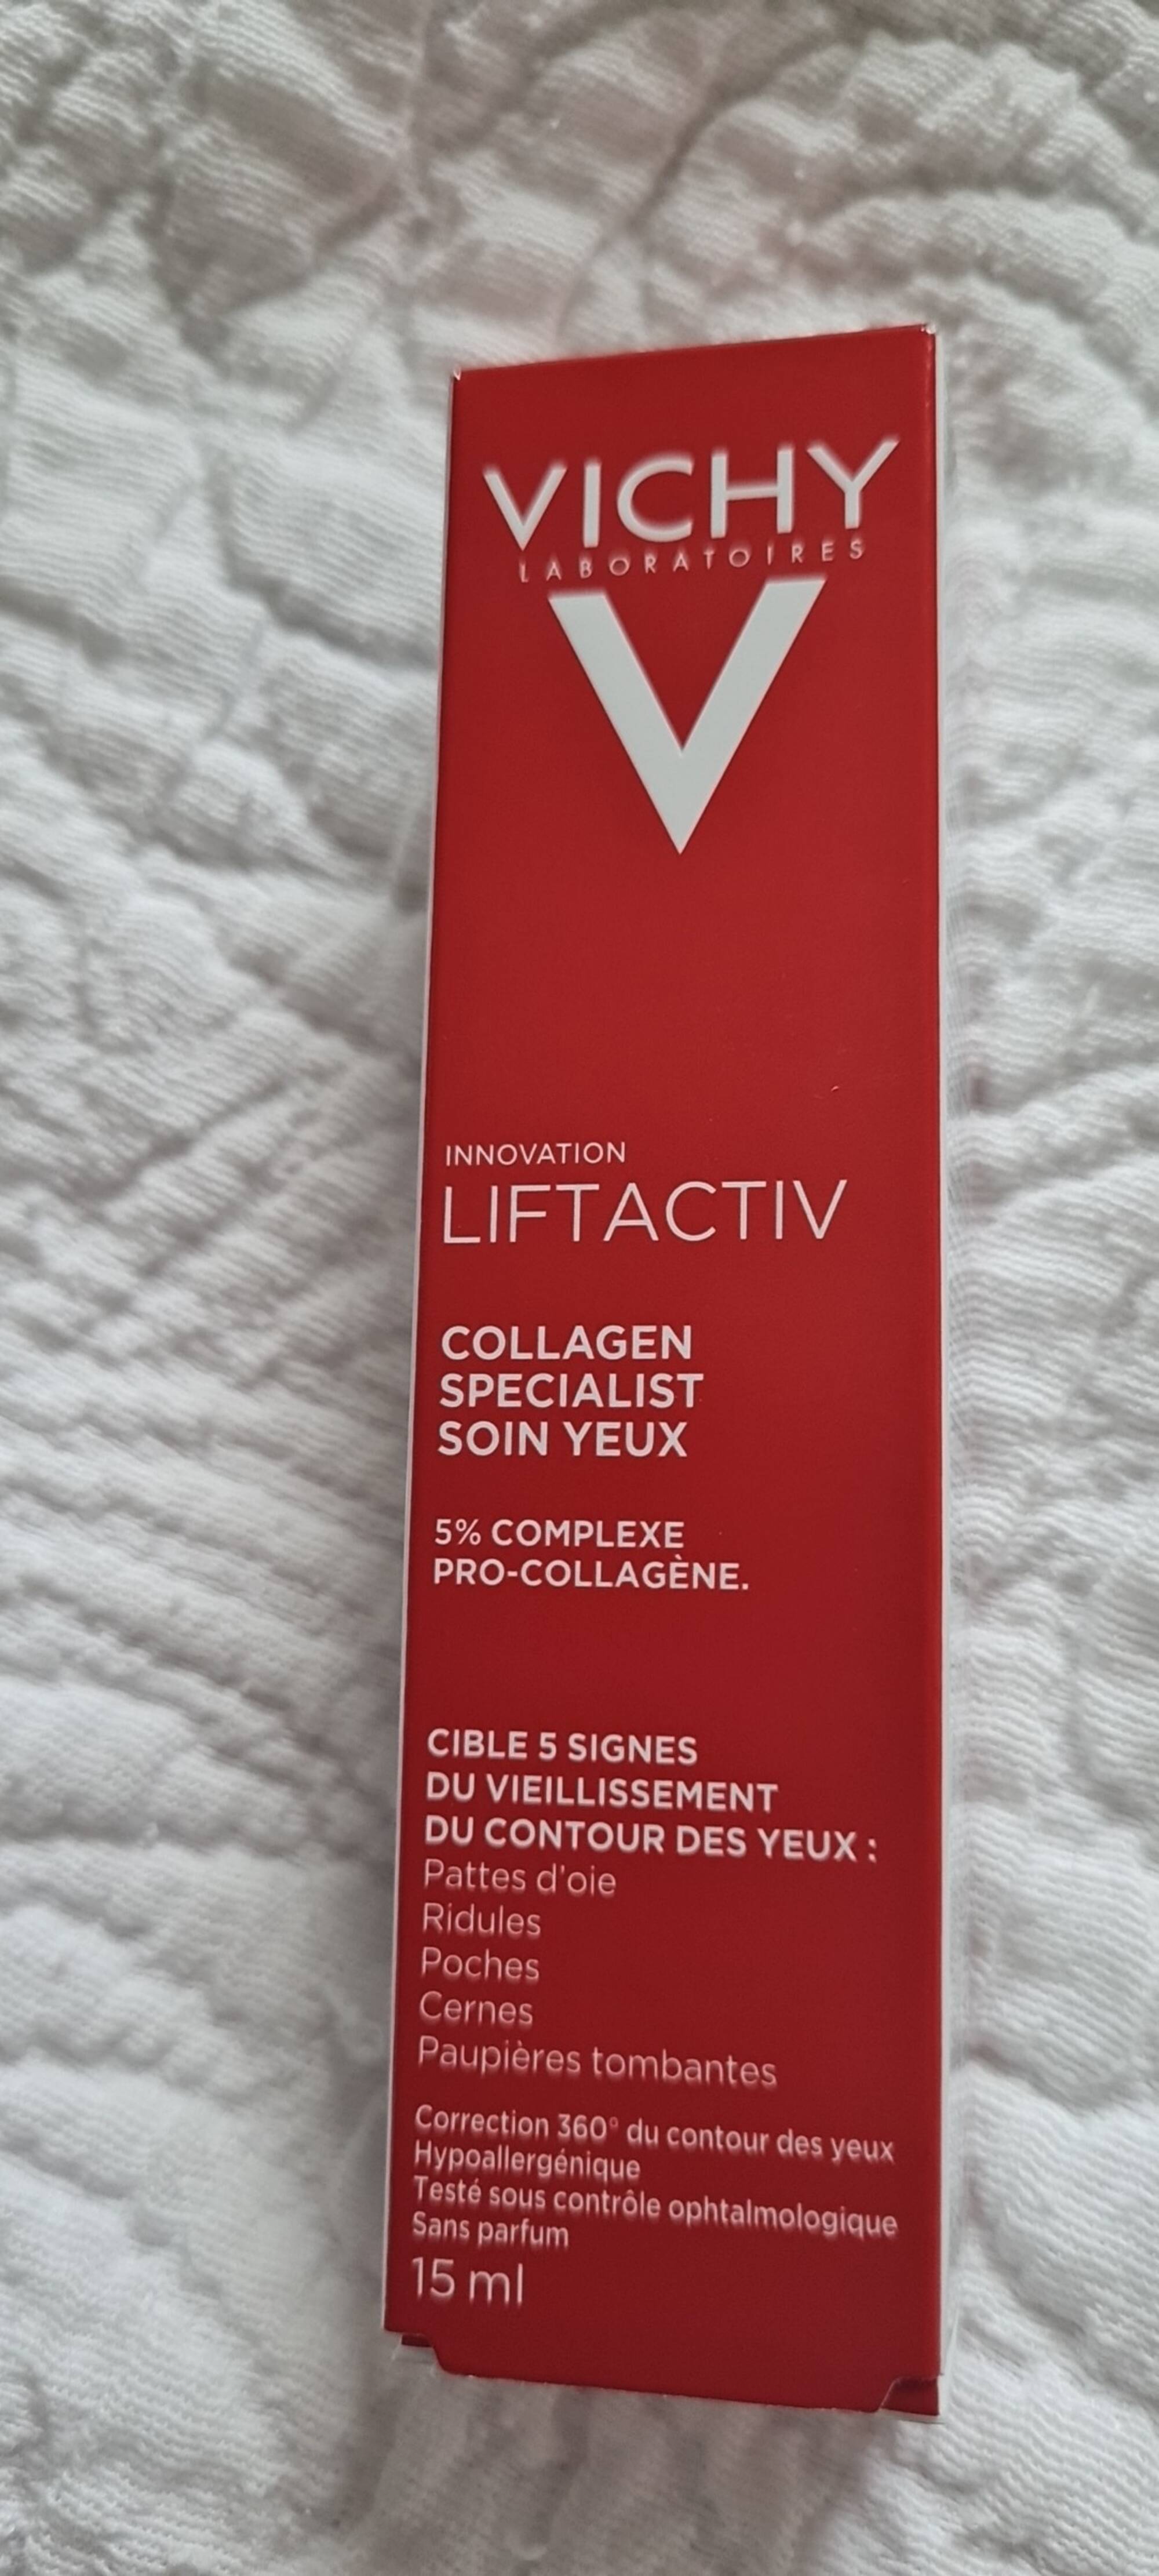 VICHY - Lift Activ - Collagen specialist soin yeux